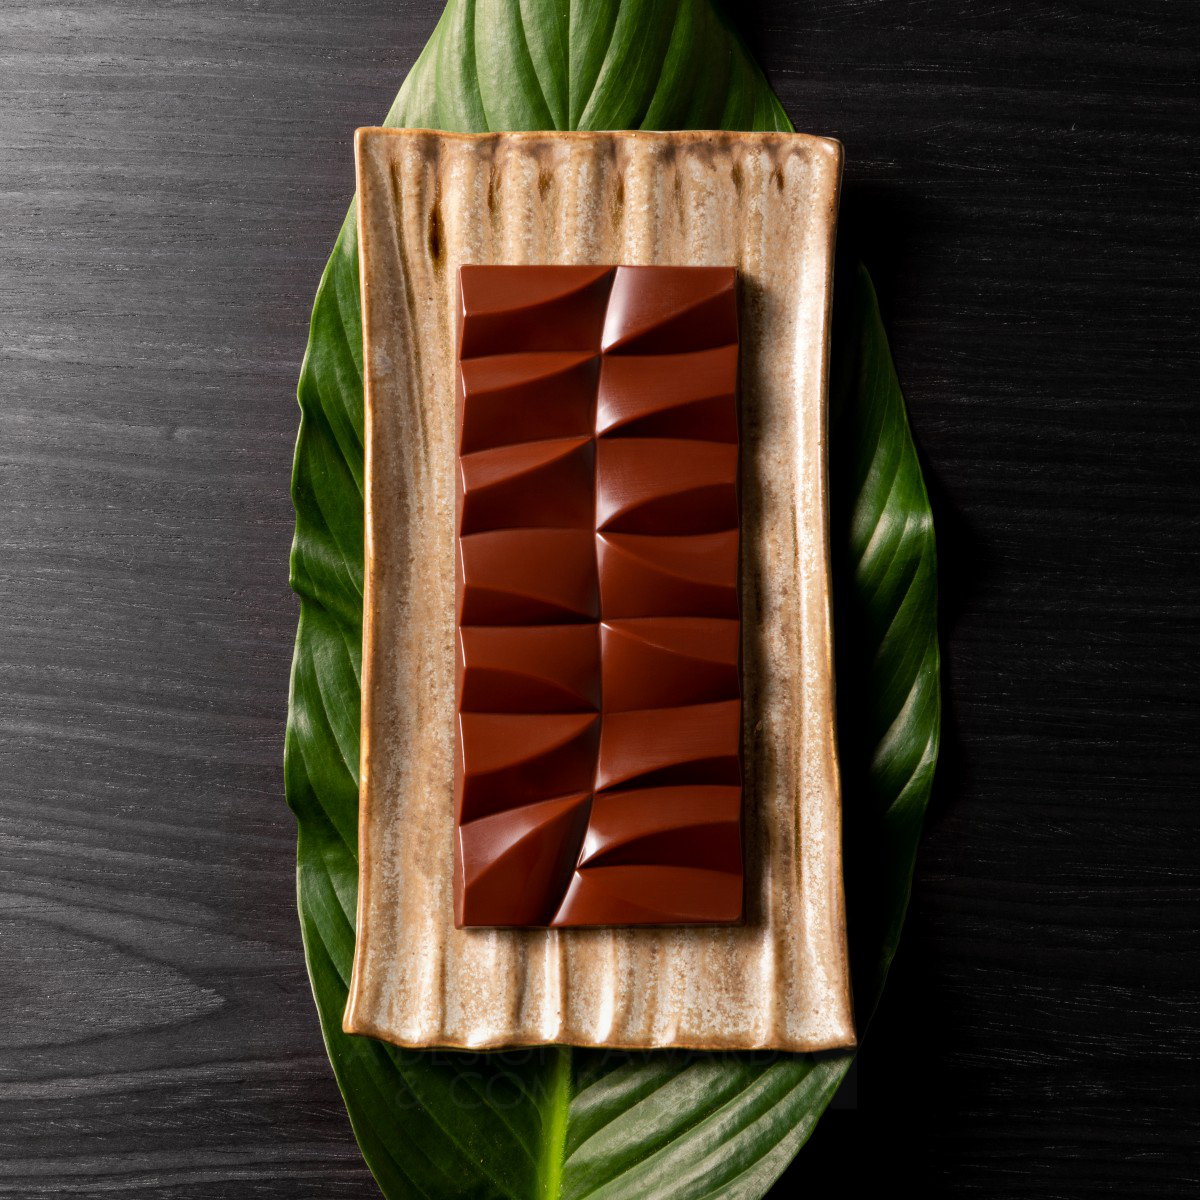 Revolutionizing Chocolate: The Dengo 80g Bar